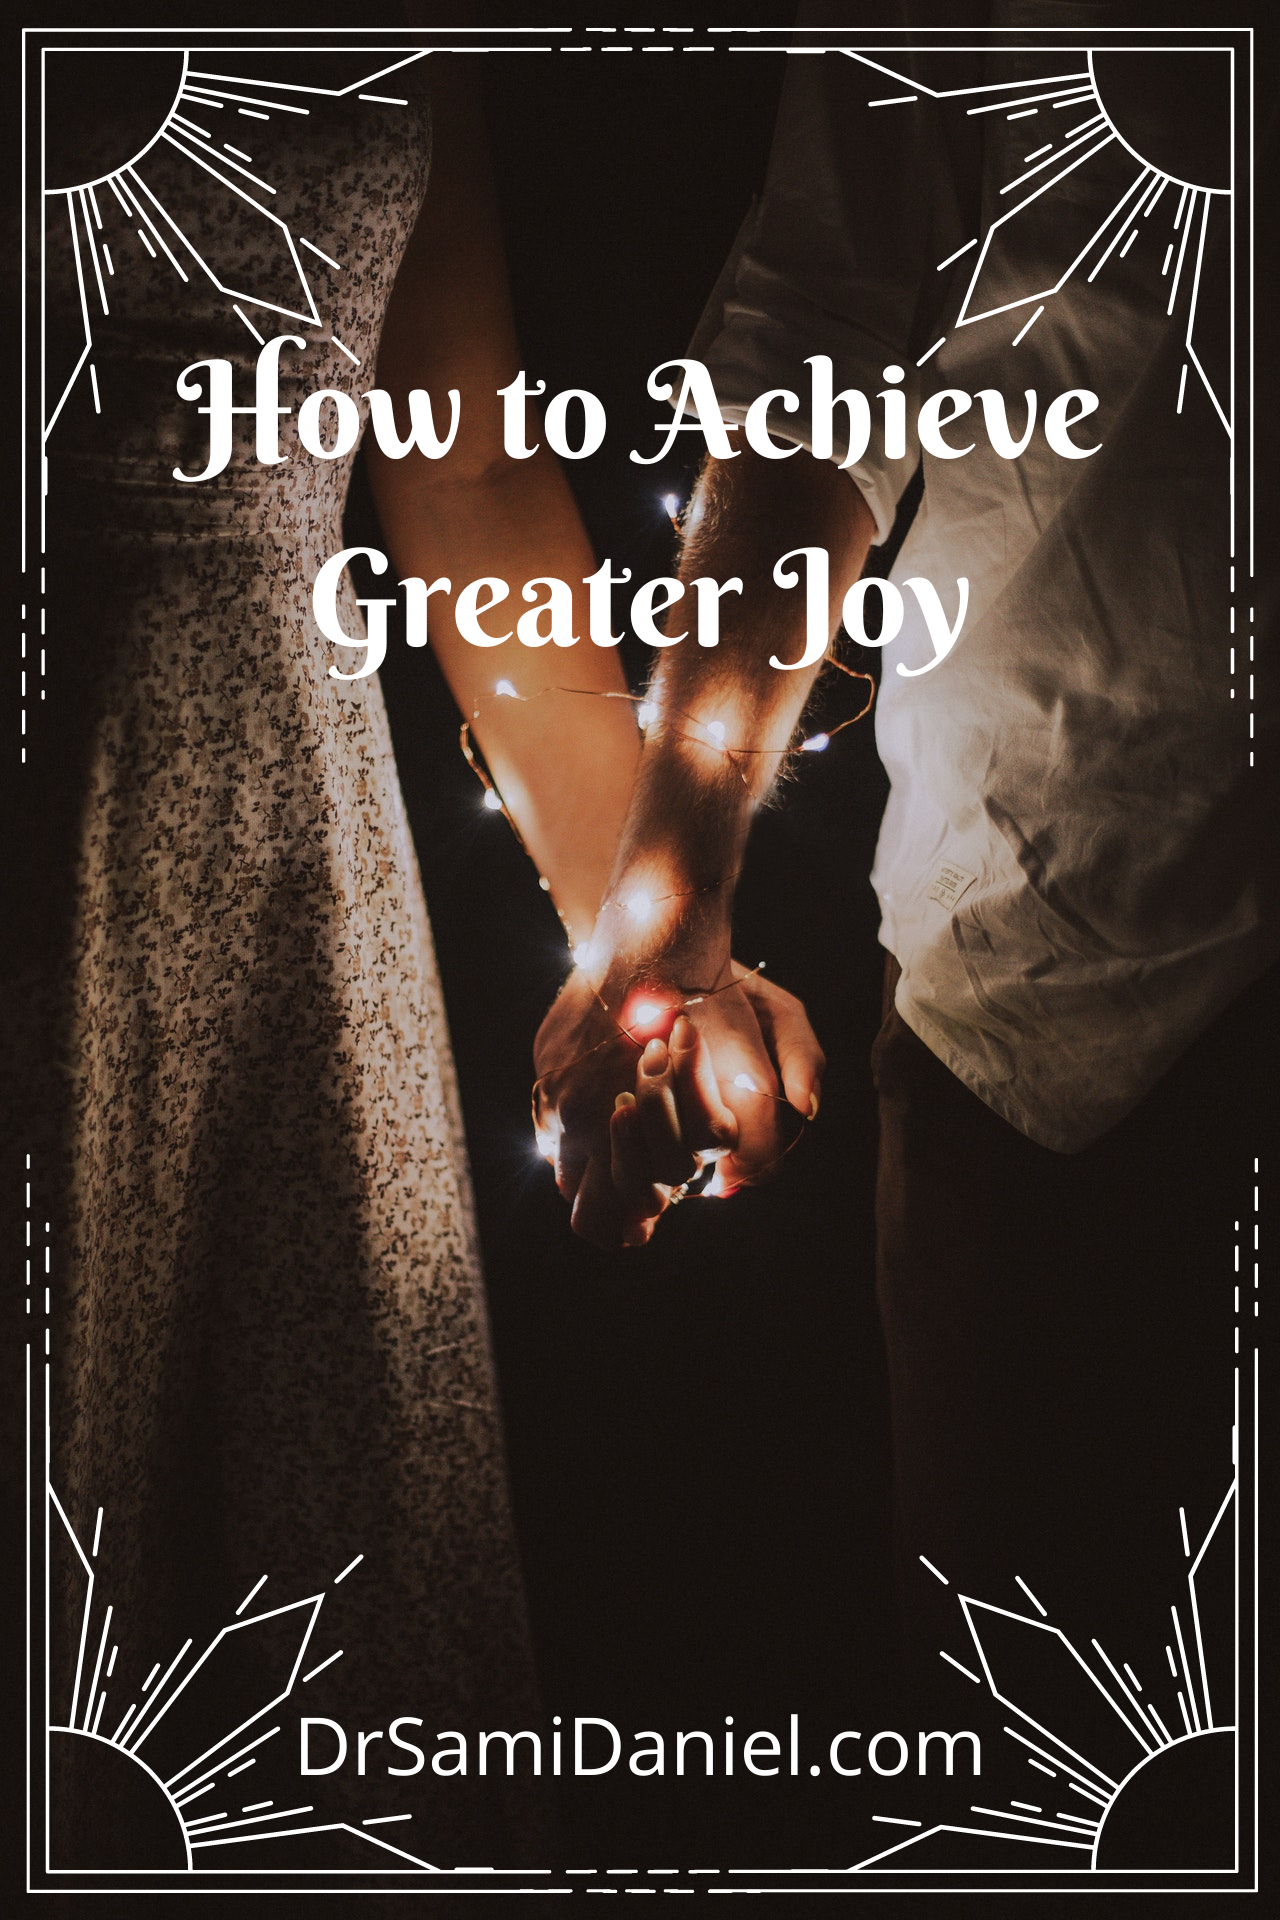 How to achieve greater joy